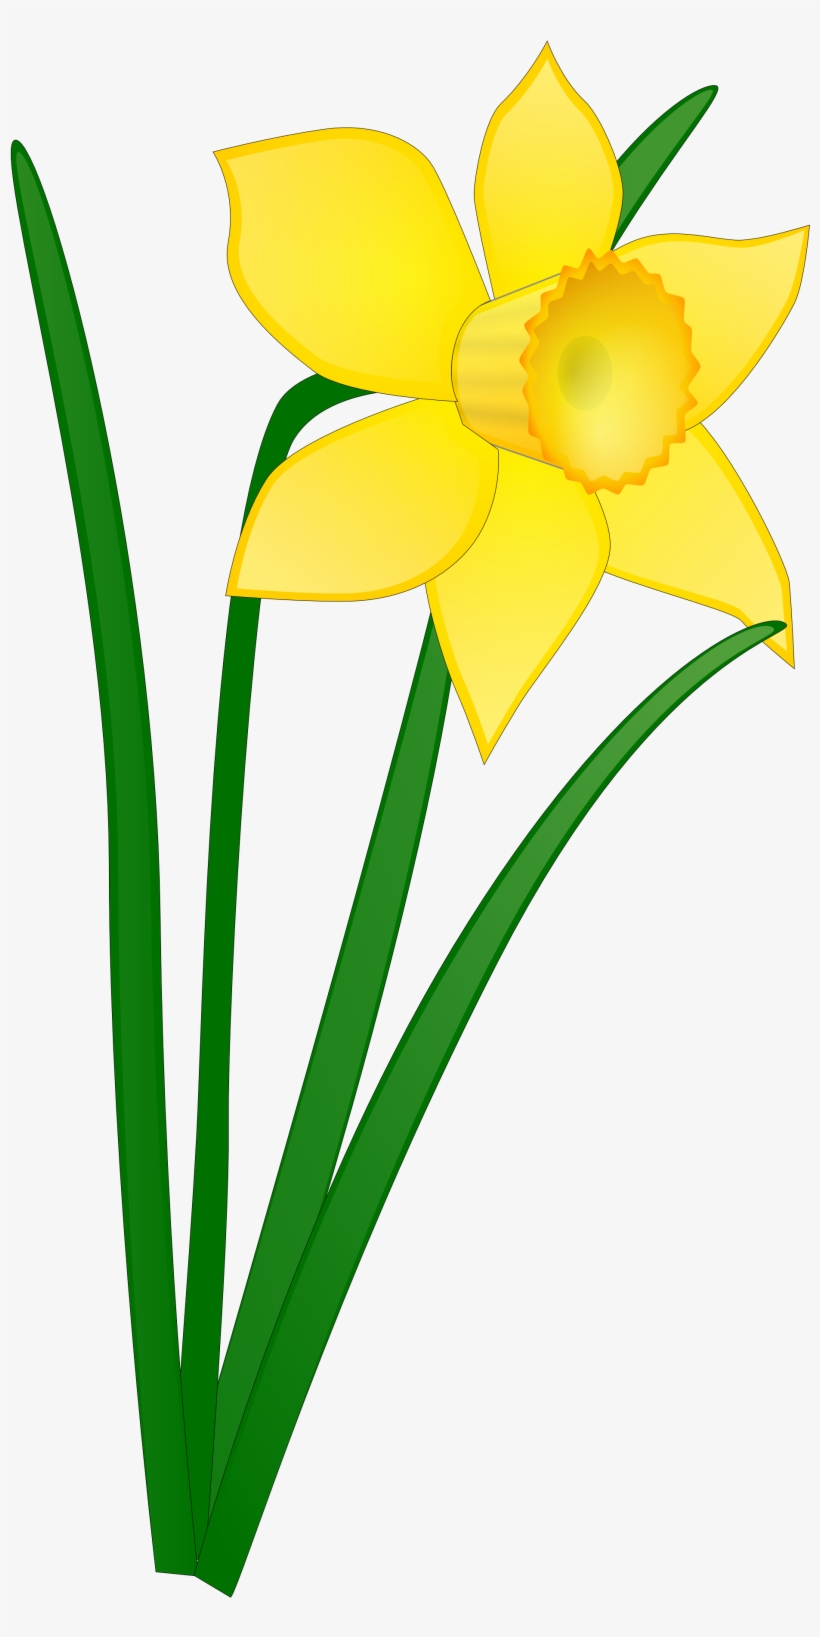 Svg Transparent Daffodil Flower Clip Art Panda Free - Daffodil Clipart, transparent png #145198